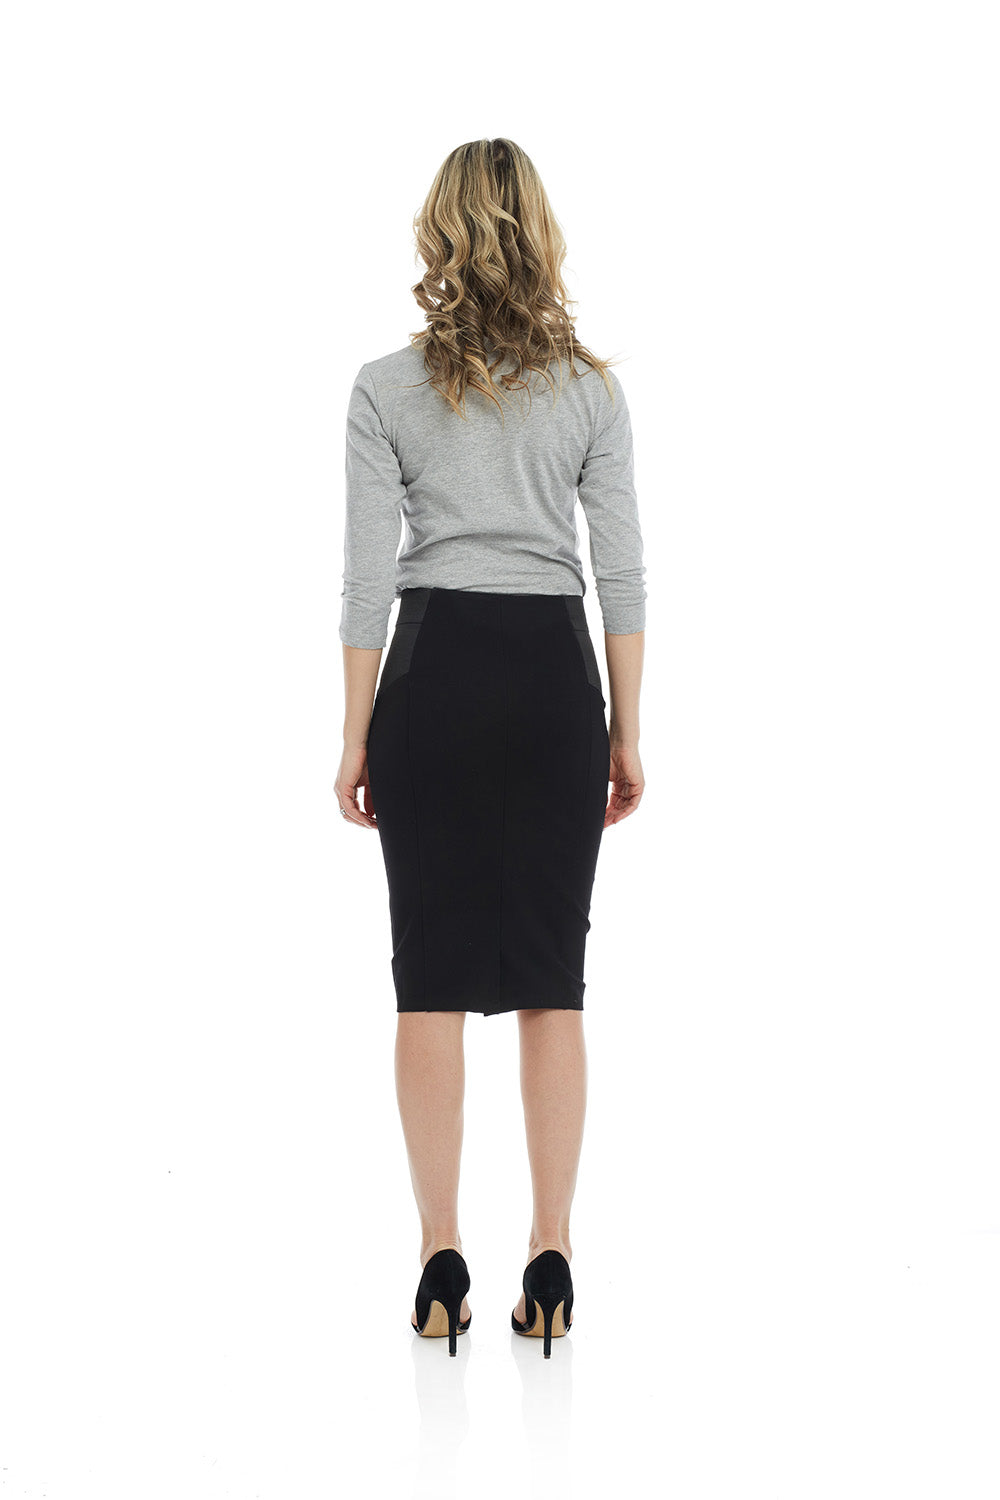 Esteez CHARLOTTE Skirt - Ponte Skirt for Women with Tummy Control - BLACK